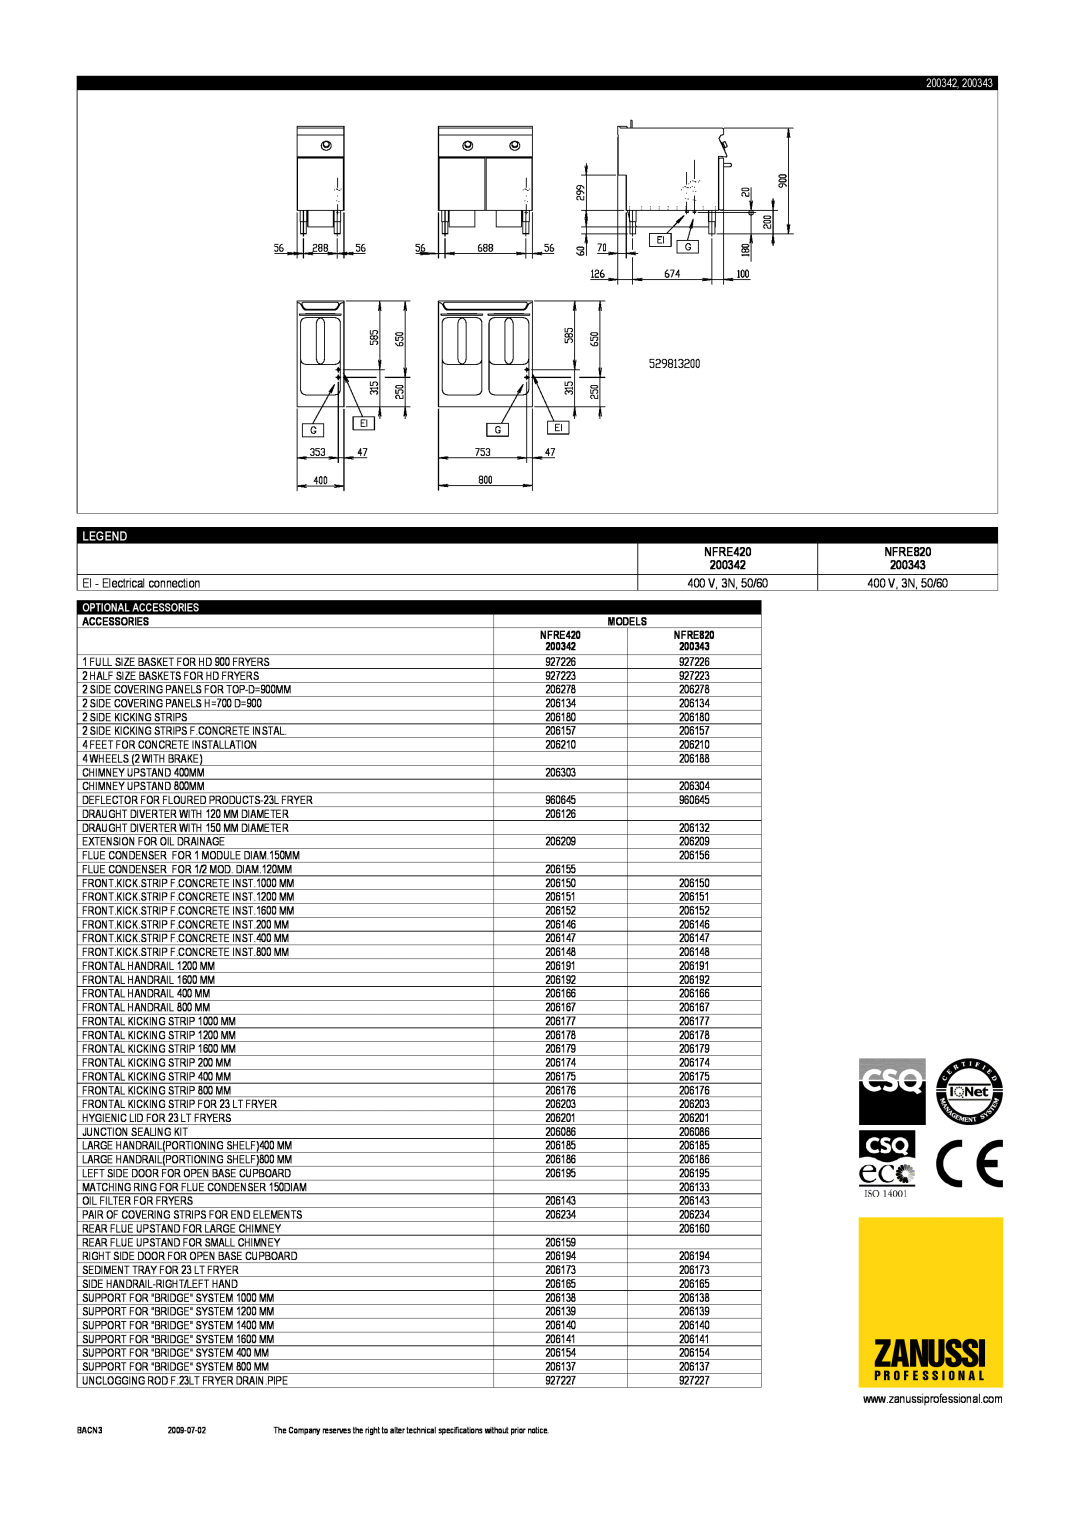 Electrolux NFRE420 Zanussi, EI - Electrical connection, NFRE820, 200342, 200343, 400 V, 3N, 50/60, P R O F E S S I O N A L 